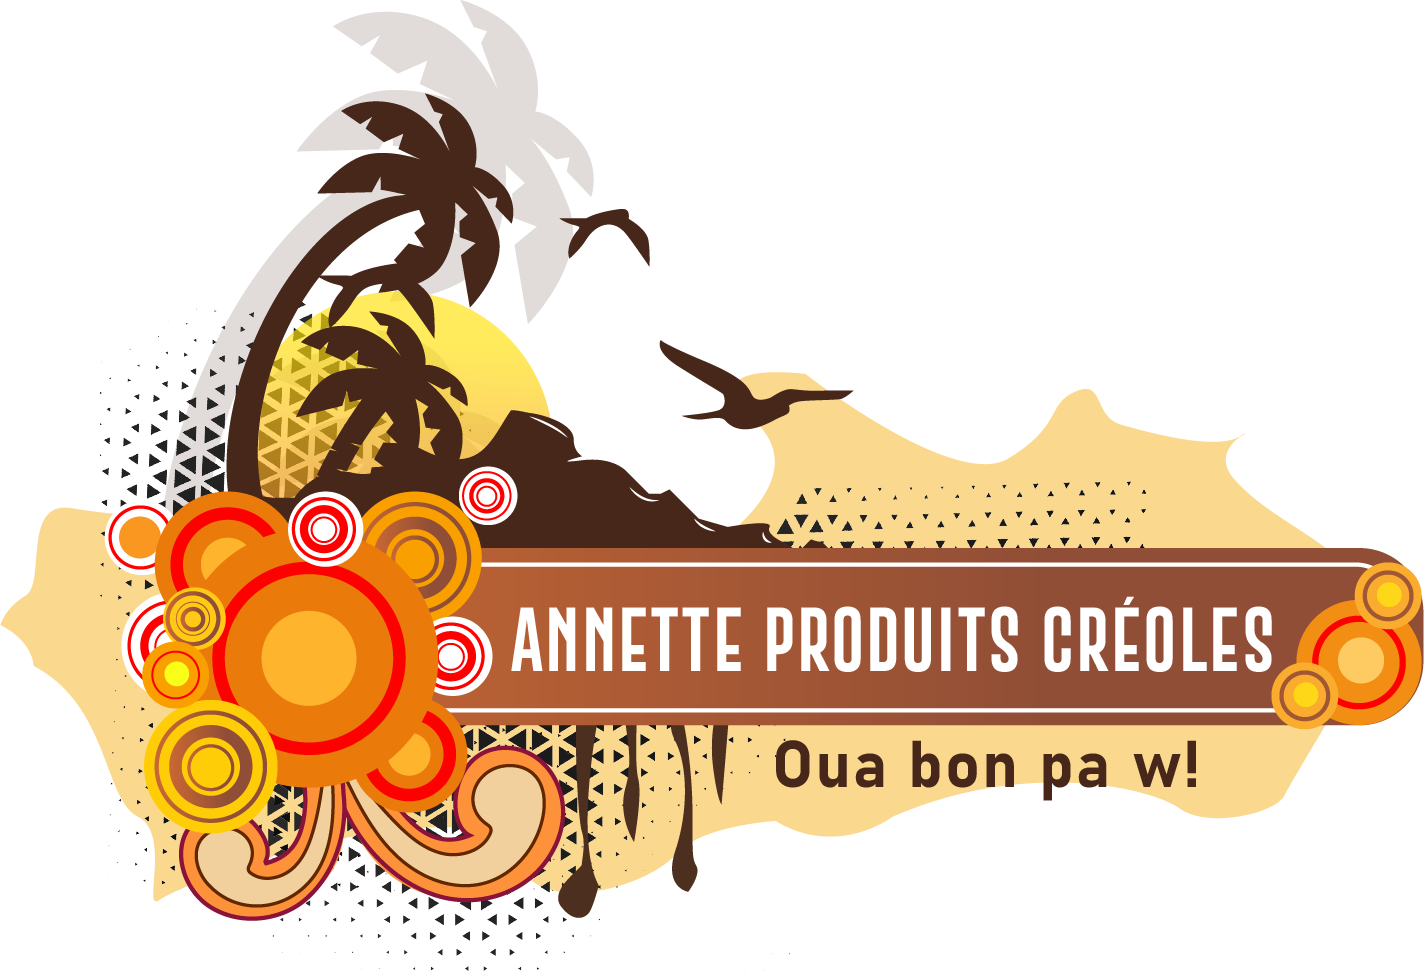 Anette Produits Creole